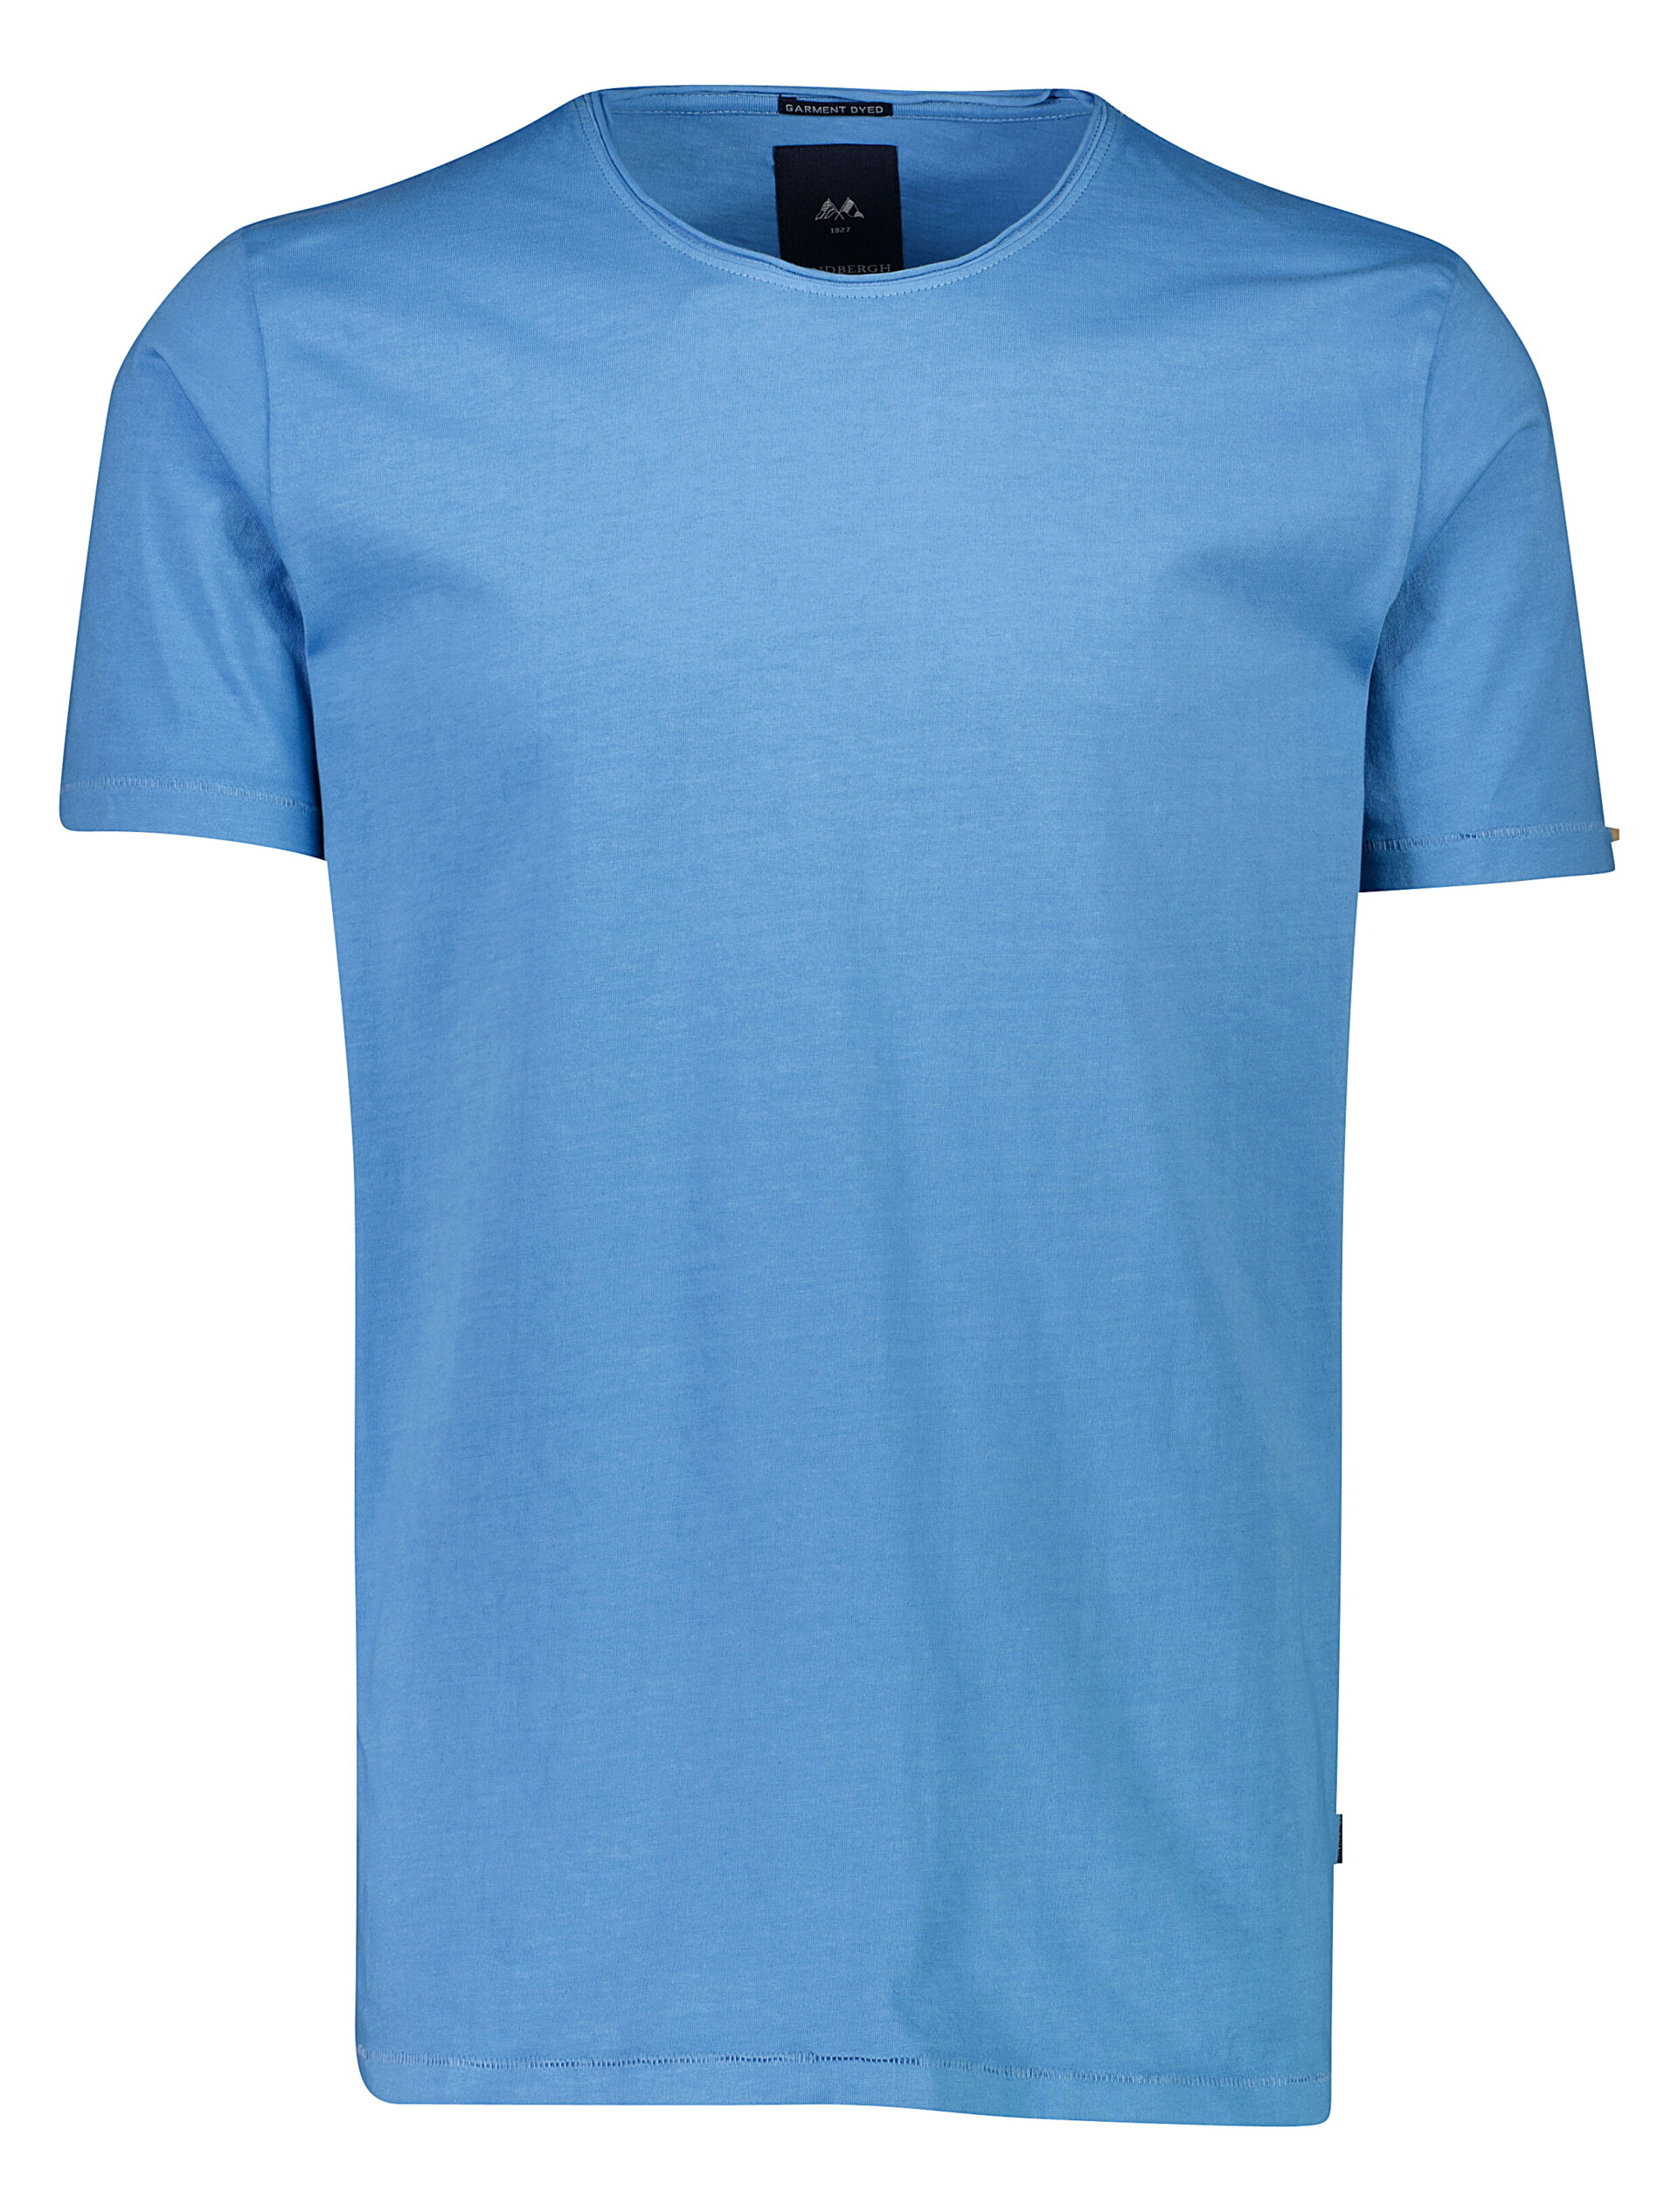 Lindbergh T-shirt blau / mid blue